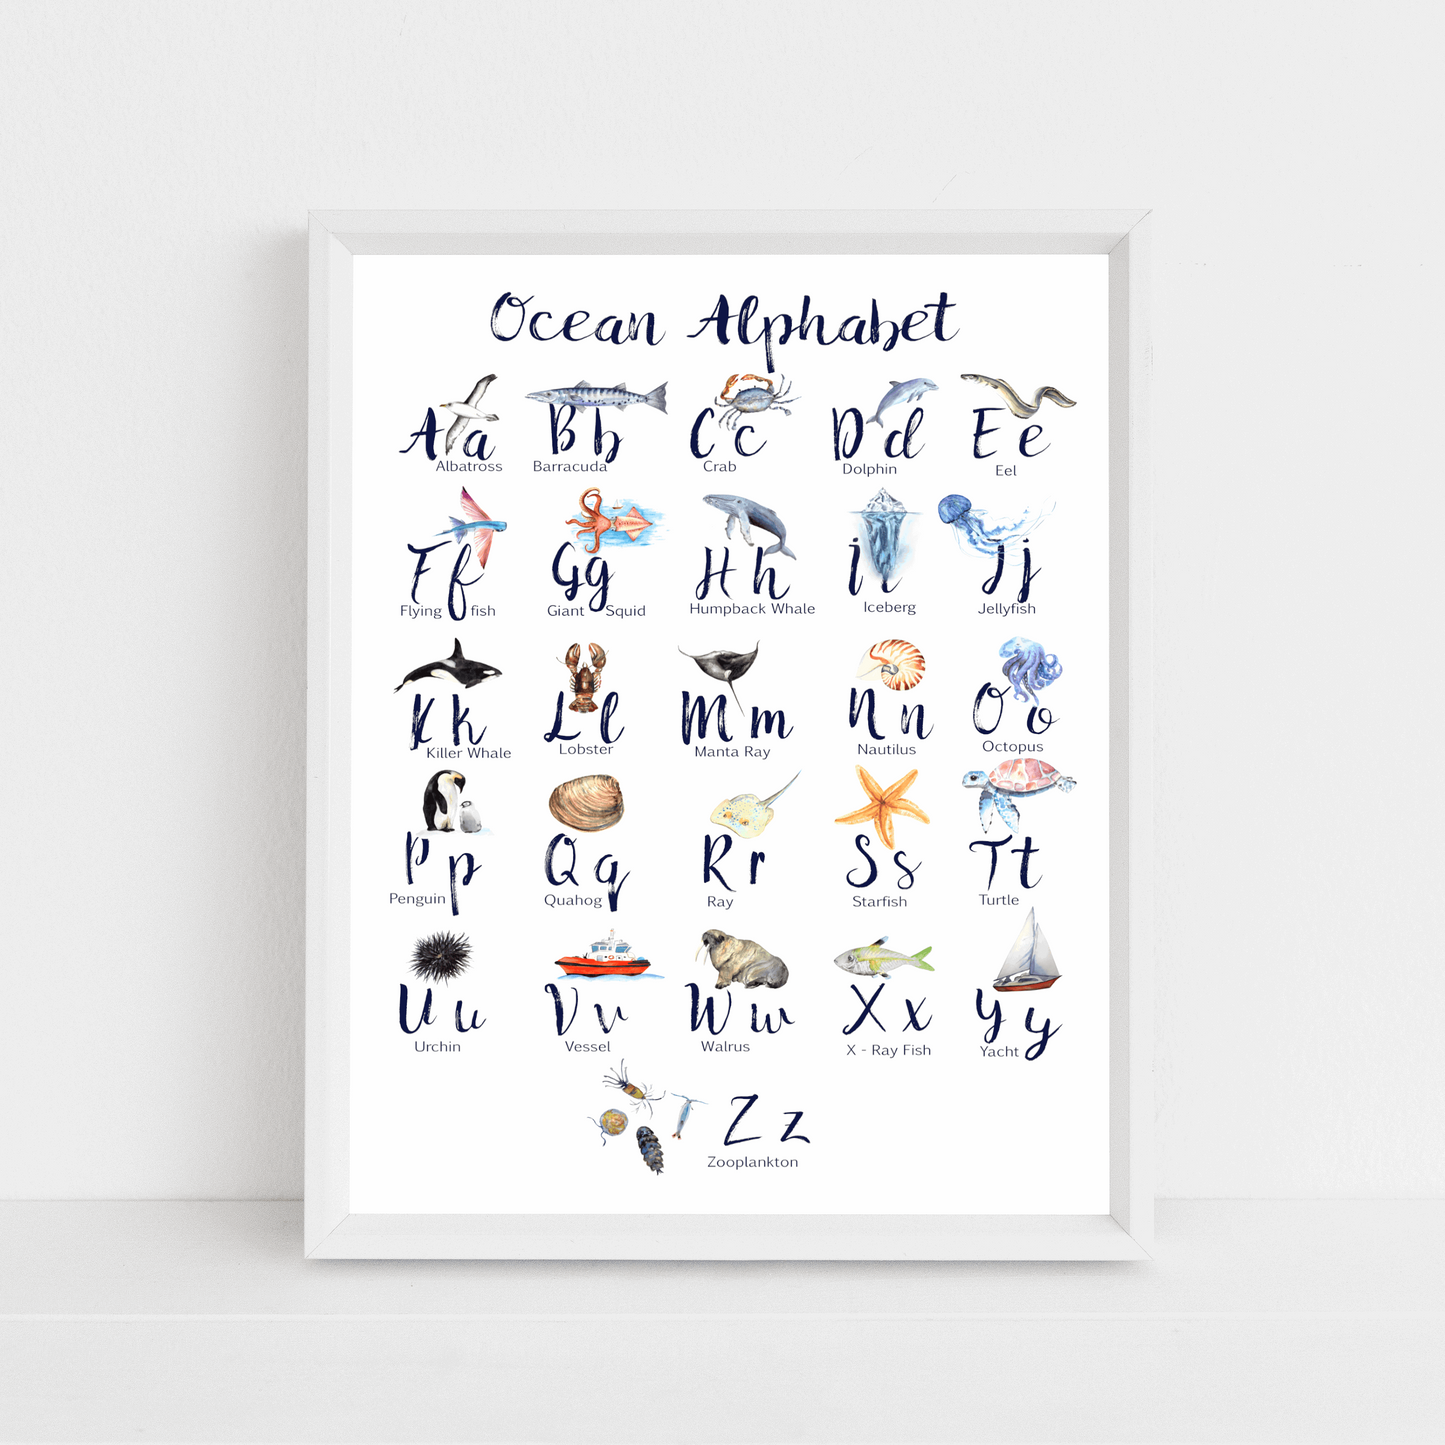 Ocean Alphabet print - Sew Tilley